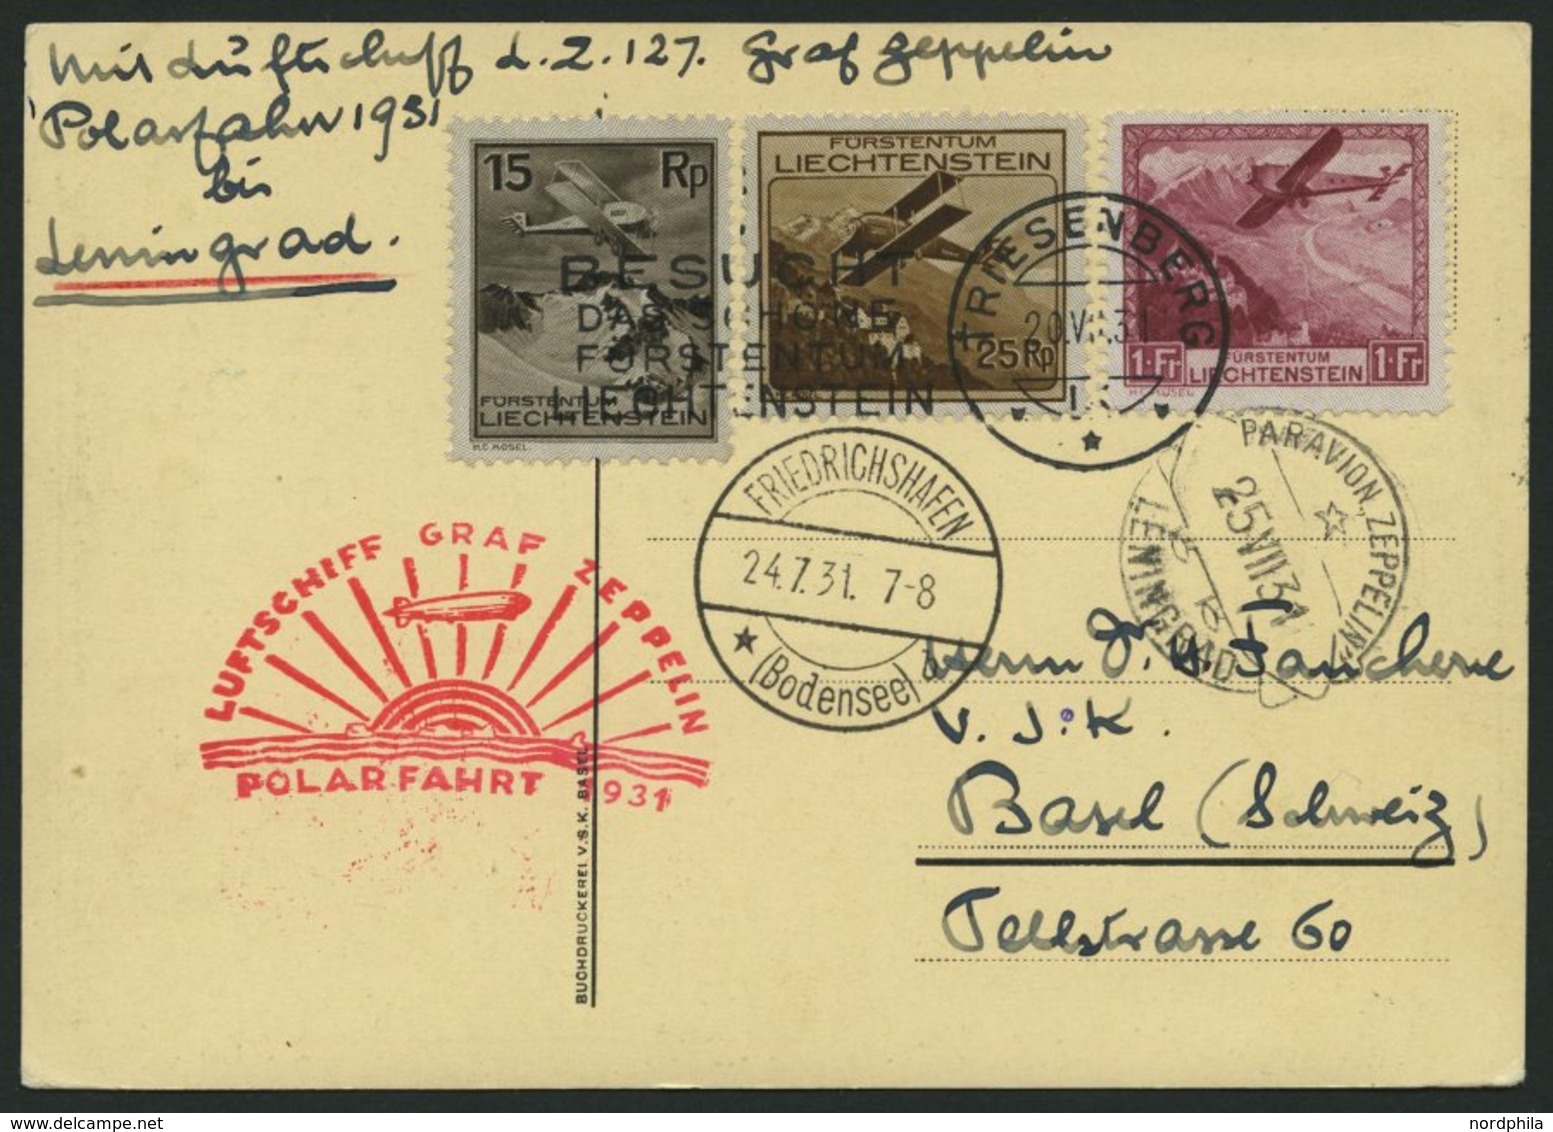 ZULEITUNGSPOST 119E BRIEF, Liechtenstein: 1931, Polarfahrt, Abgabe Leningrad, Prachtkarte - Zeppelin